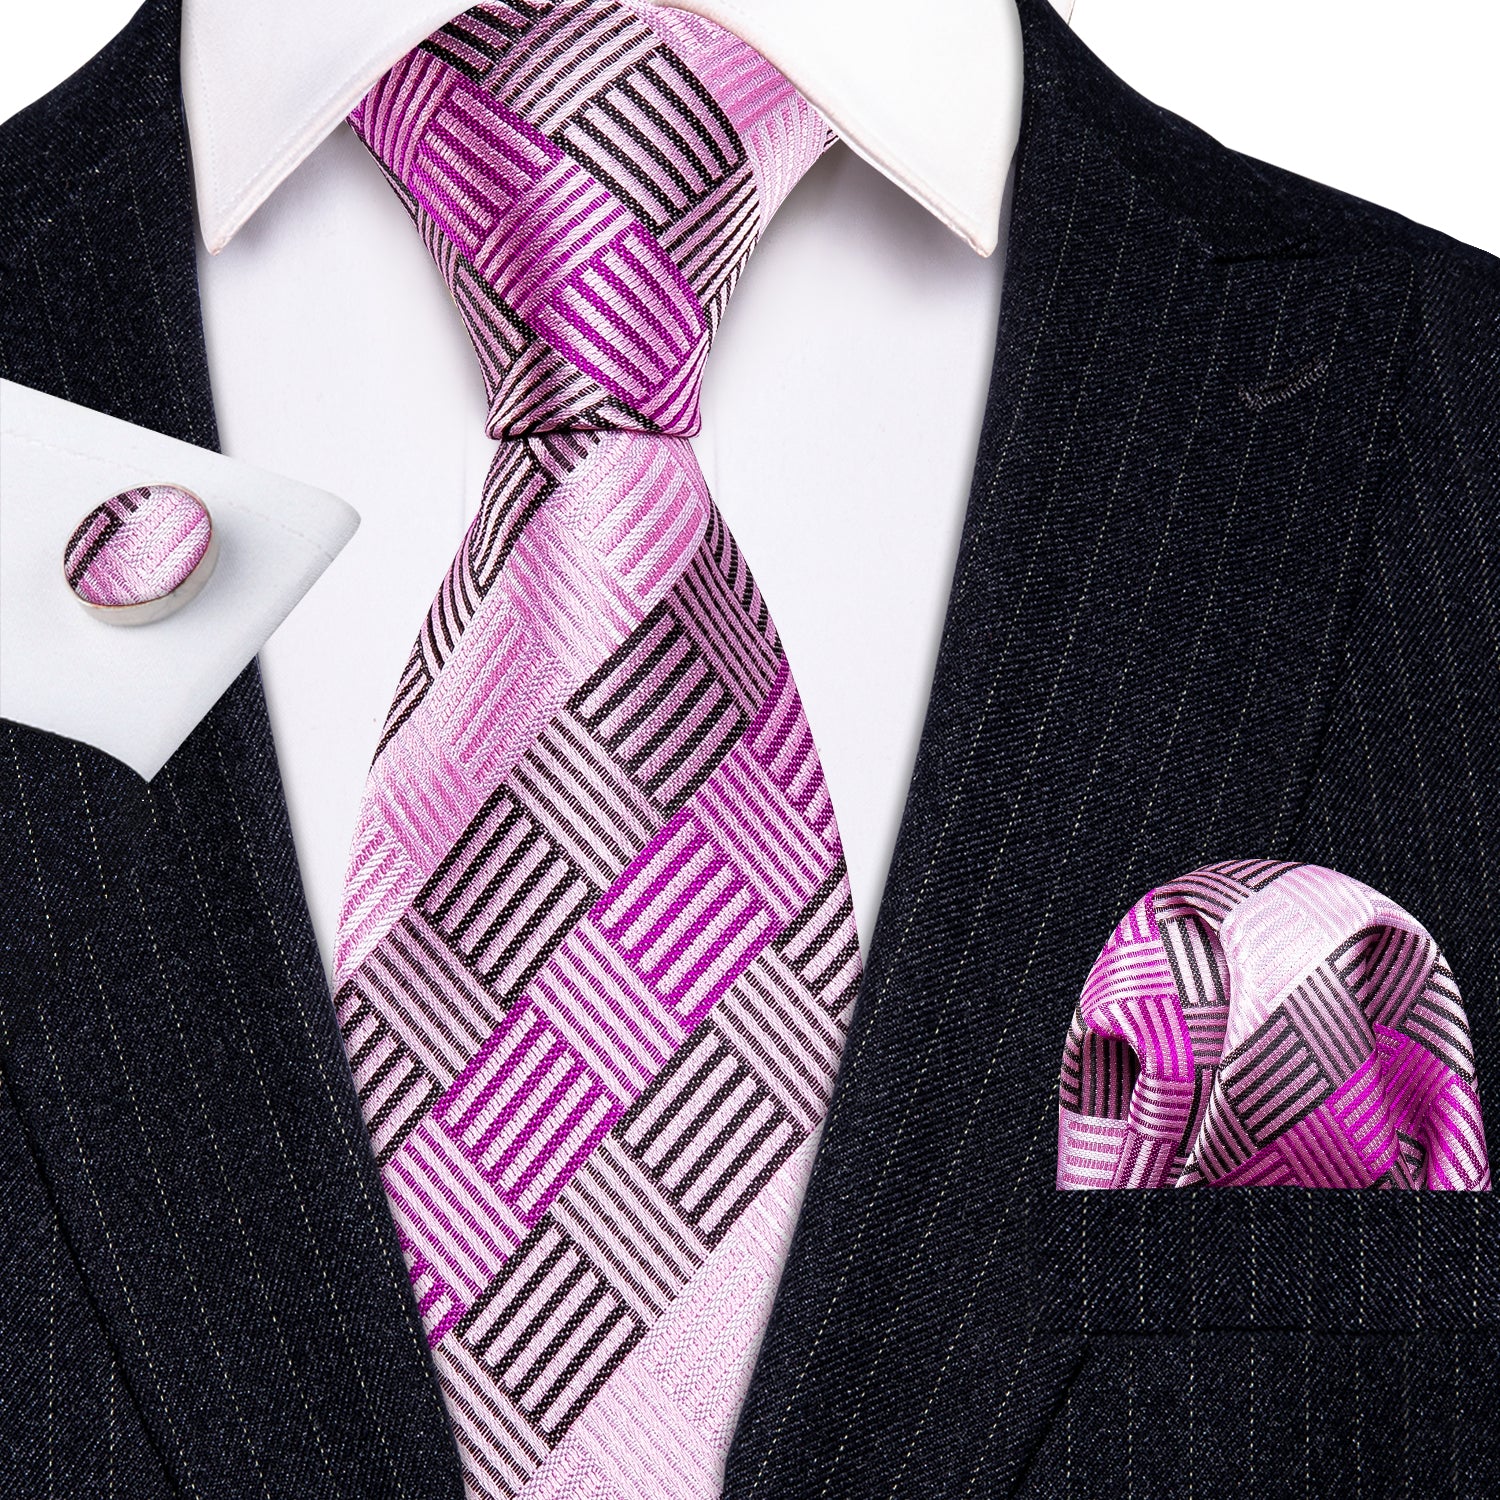 Barry.wang Pink Tie Geometric Plaid Tie Pocket Square Cufflinks Set